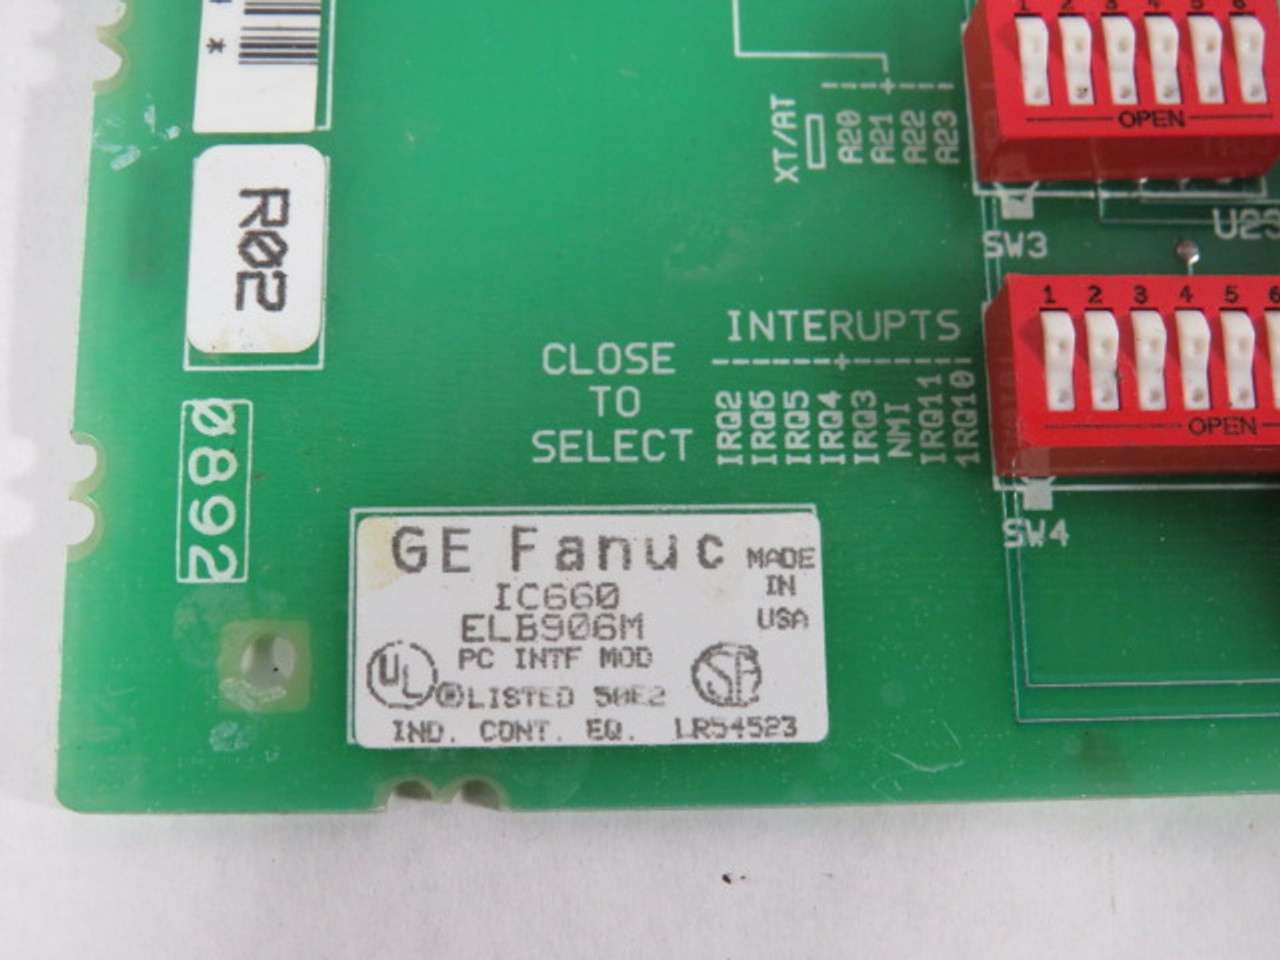 GE Fanuc IC660-ELB906M Genius I/O PC Interface USED